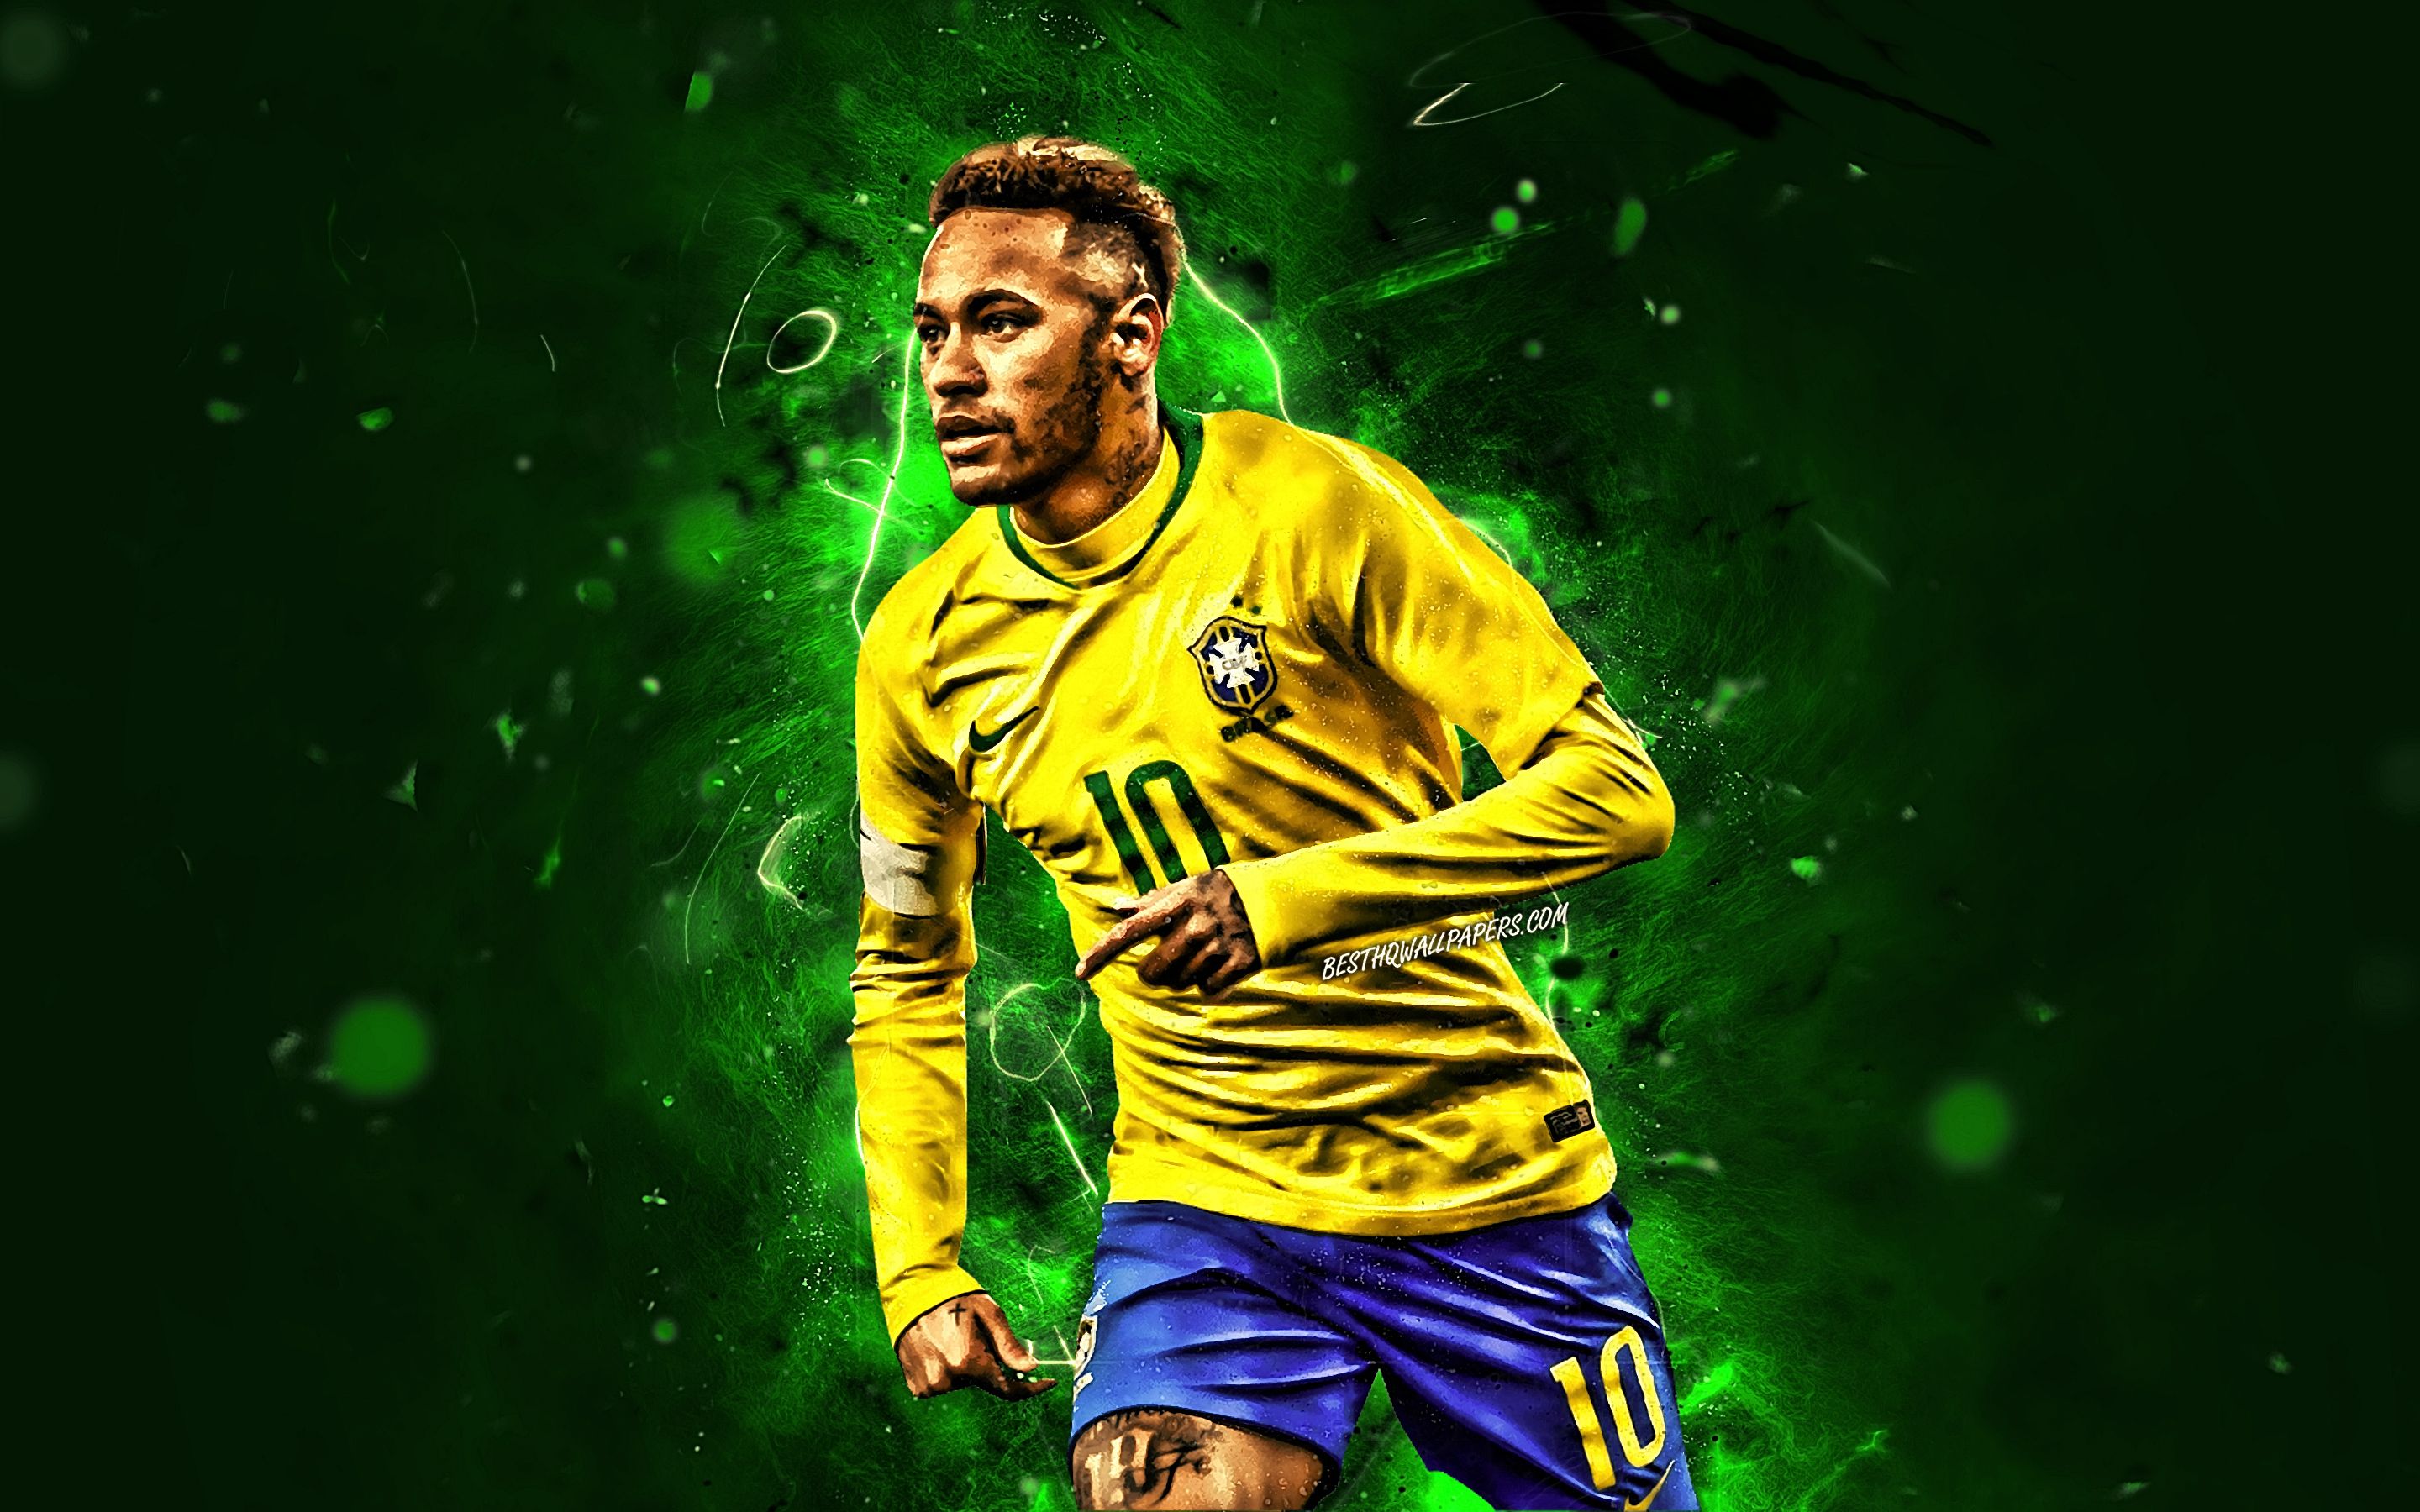 Sports Brazil National Football Team HD Wallpaper